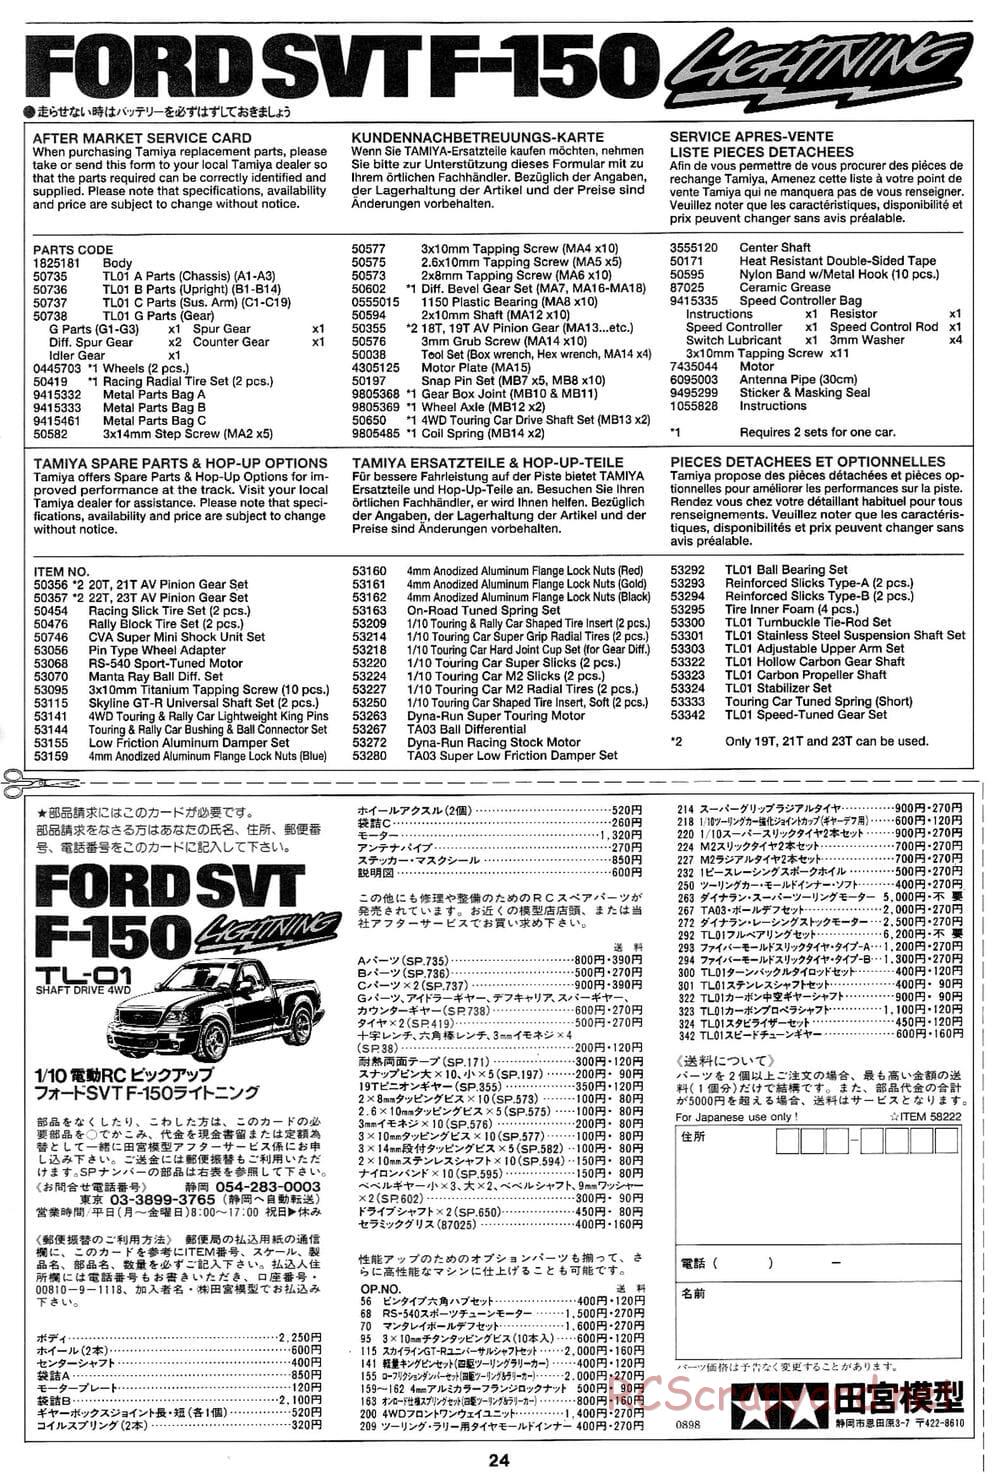 Tamiya - Ford SVT F-150 Lightning - TL-01 Chassis - Manual - Page 24